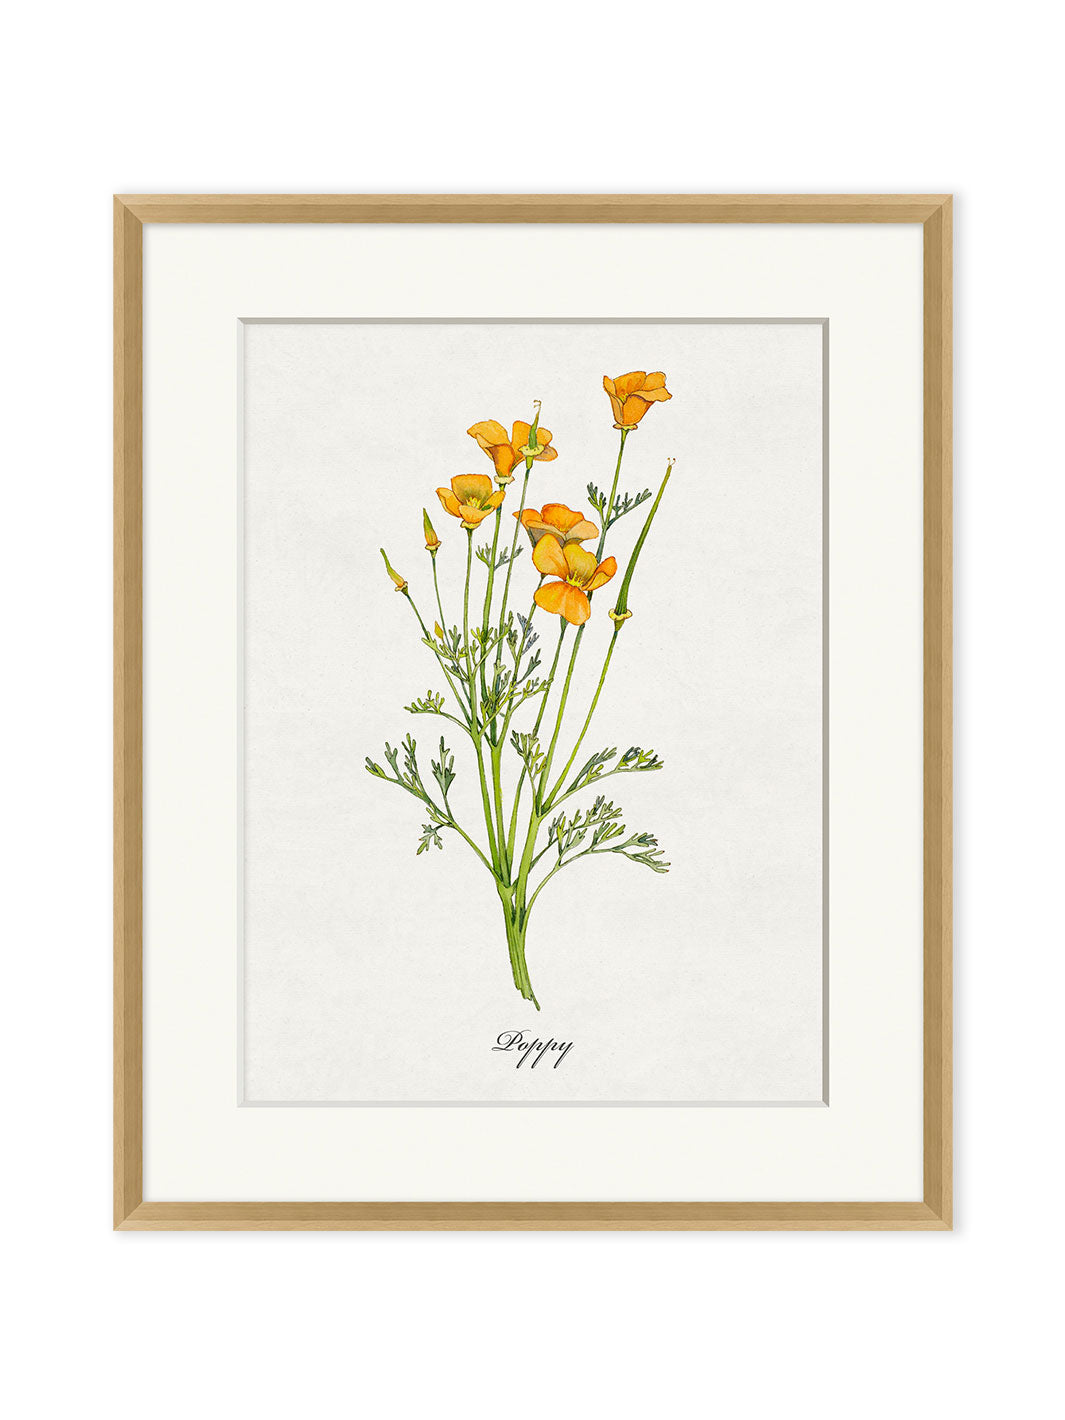 'Valley Wildflower Poppy' by Nathan Turner Framed Art